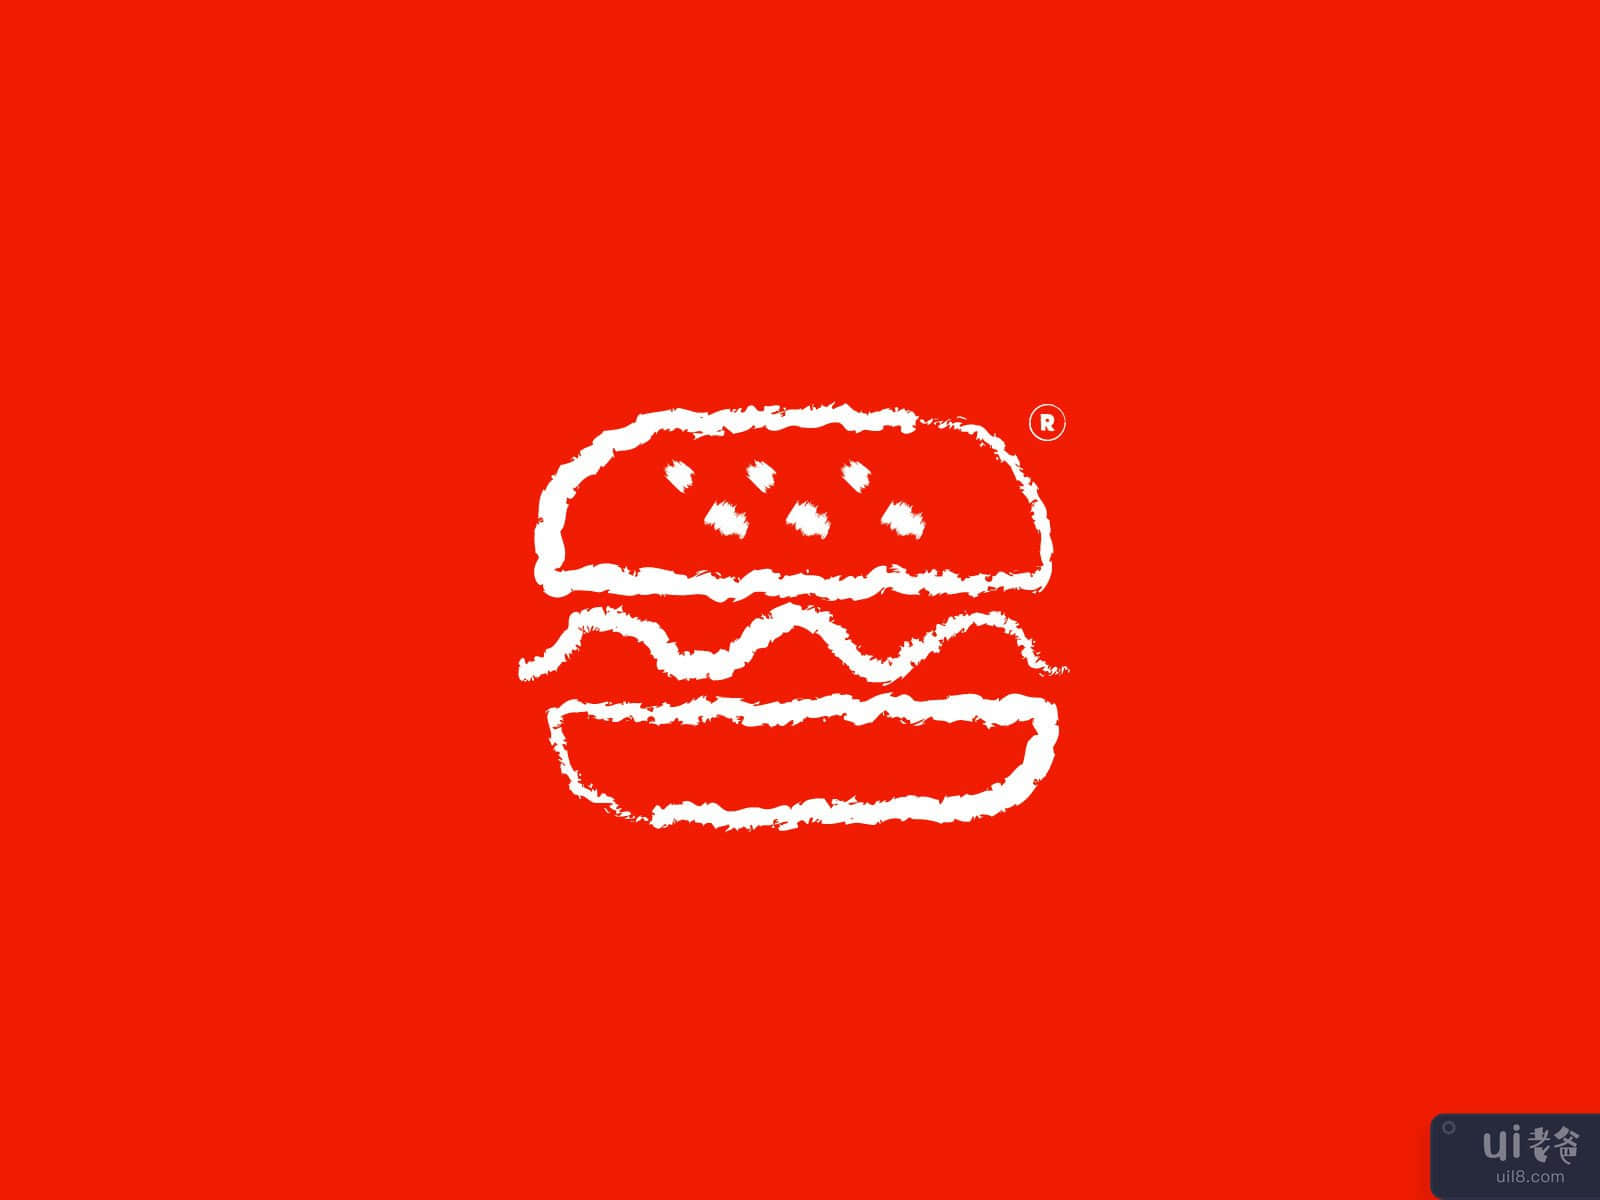 Burger restaurant icon